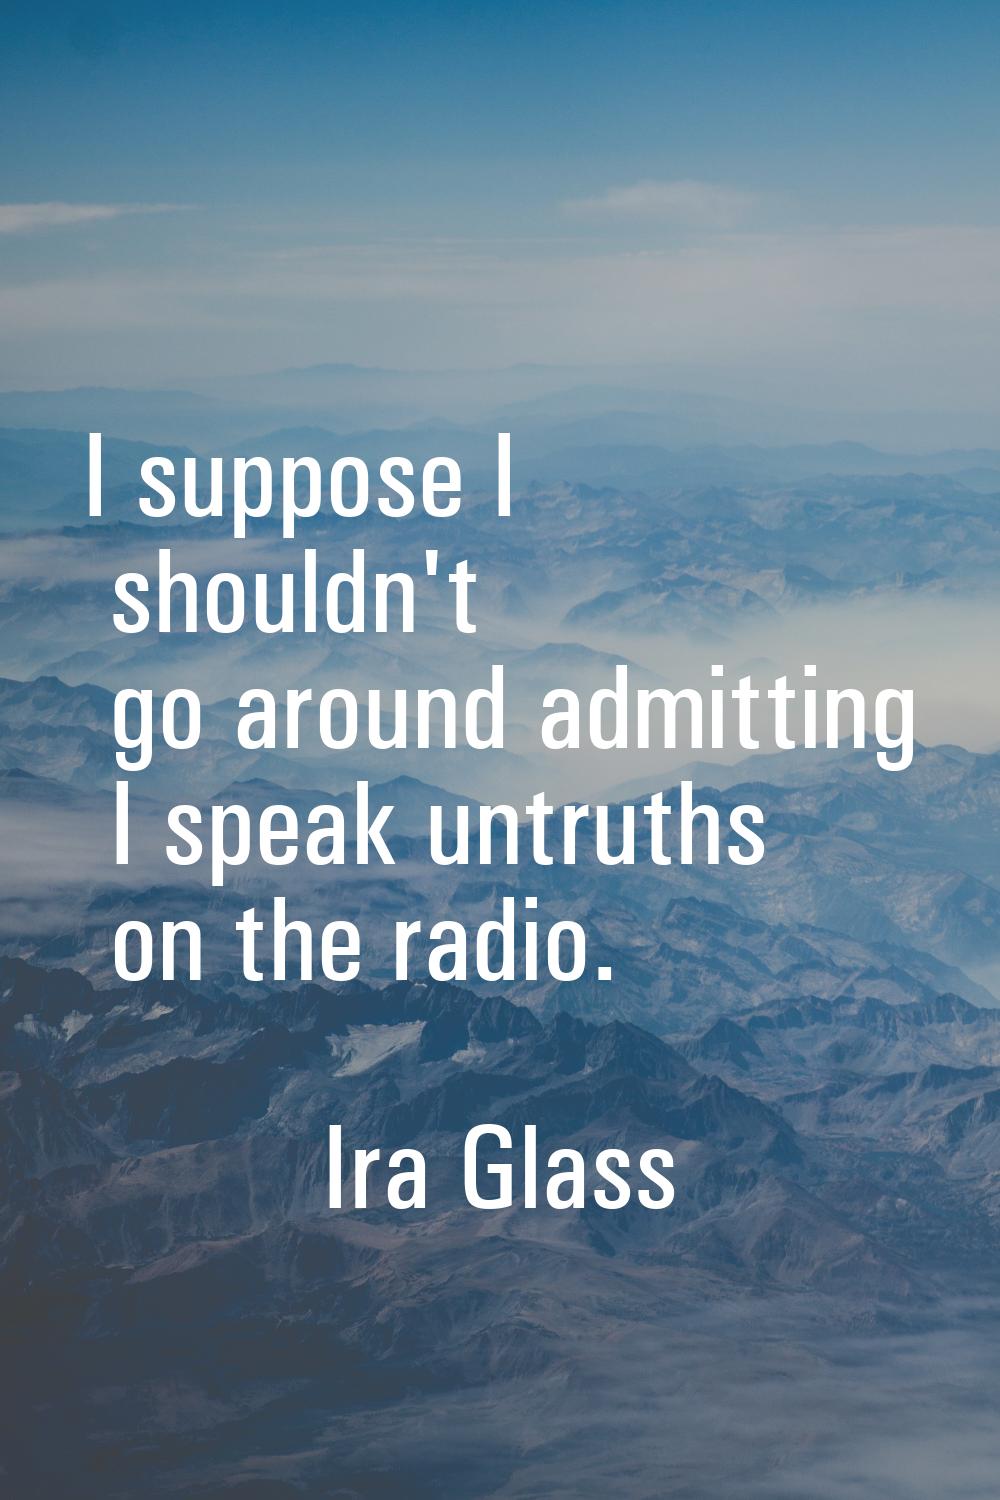 I suppose I shouldn't go around admitting I speak untruths on the radio.